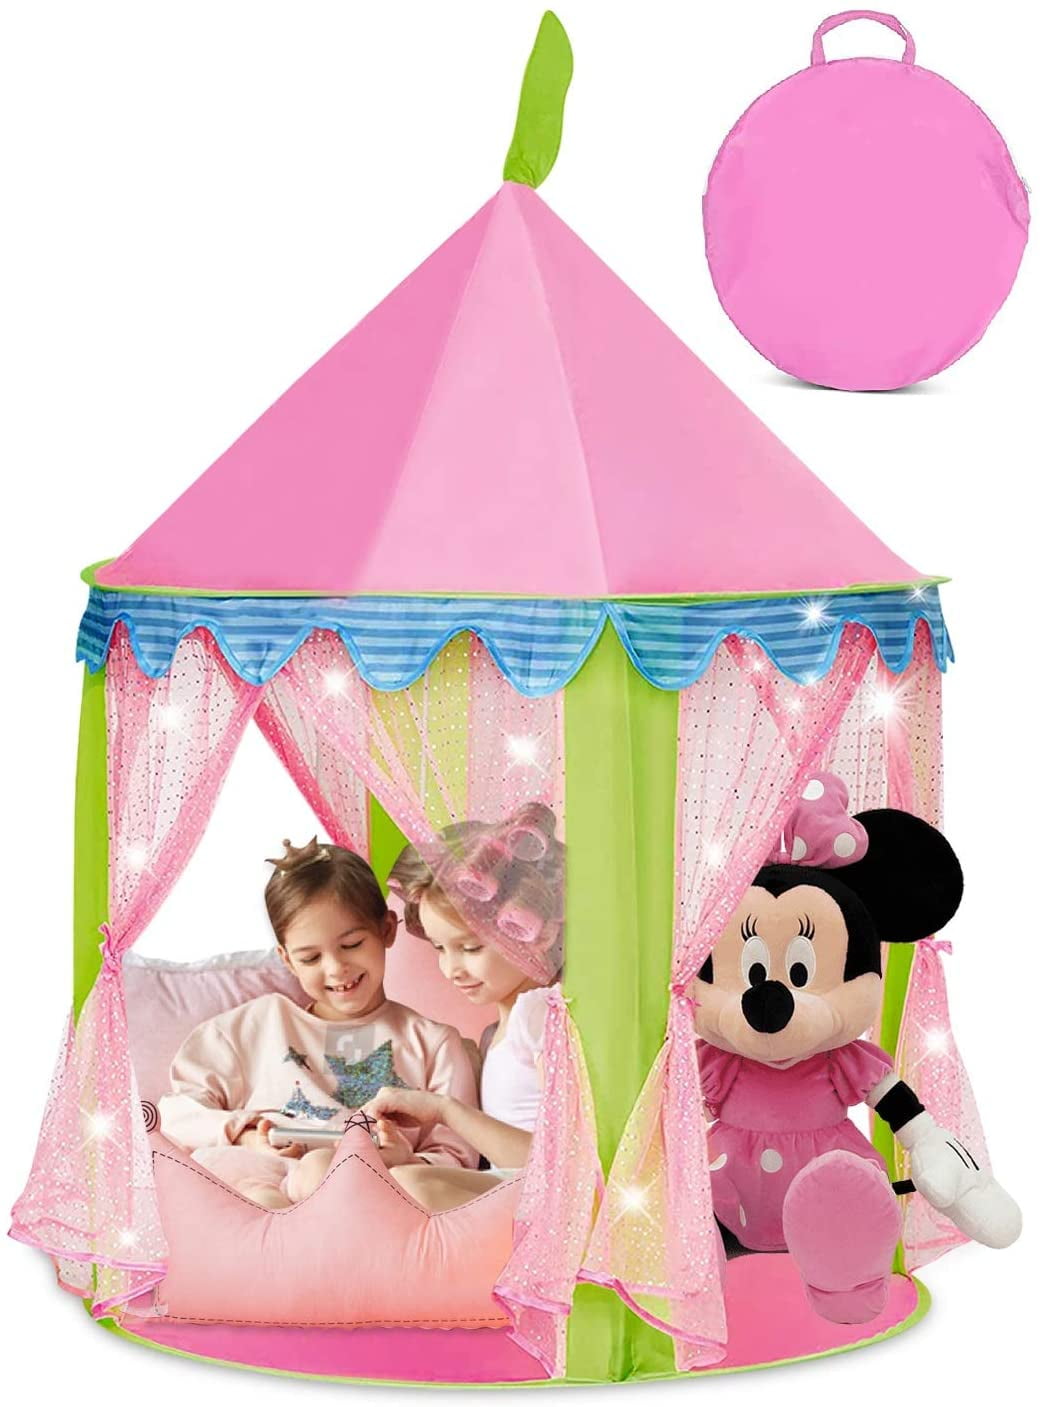 Kids Playhouse Play tent Pink Pop Up Castle Princess Indoor Outdoor Girls Gift 